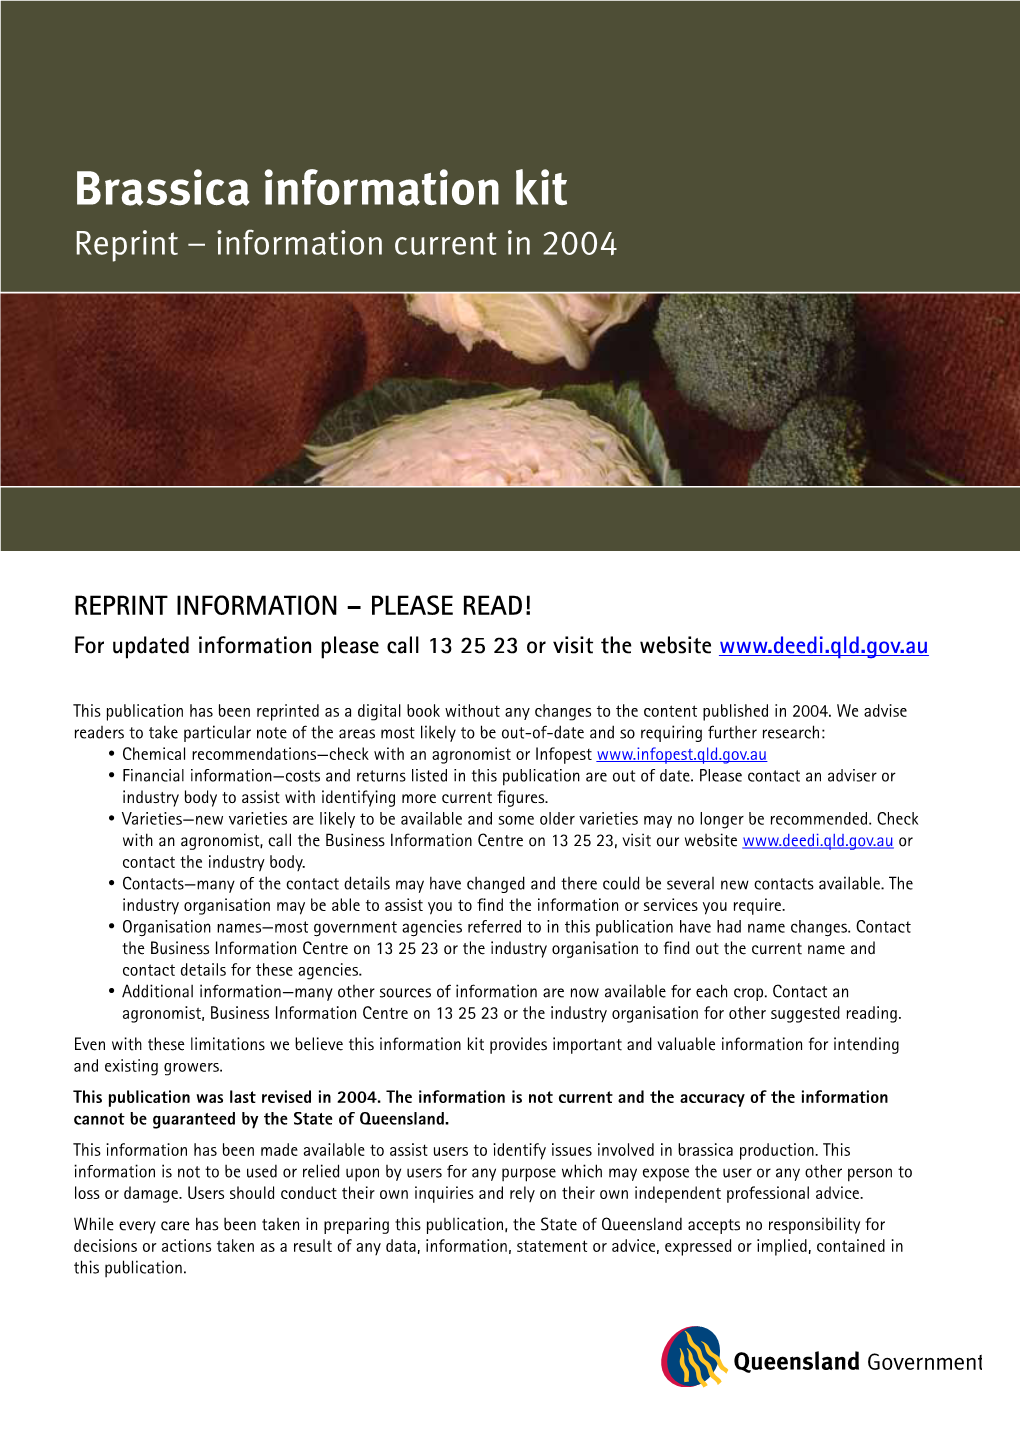 Brassica Information Kit (2004)